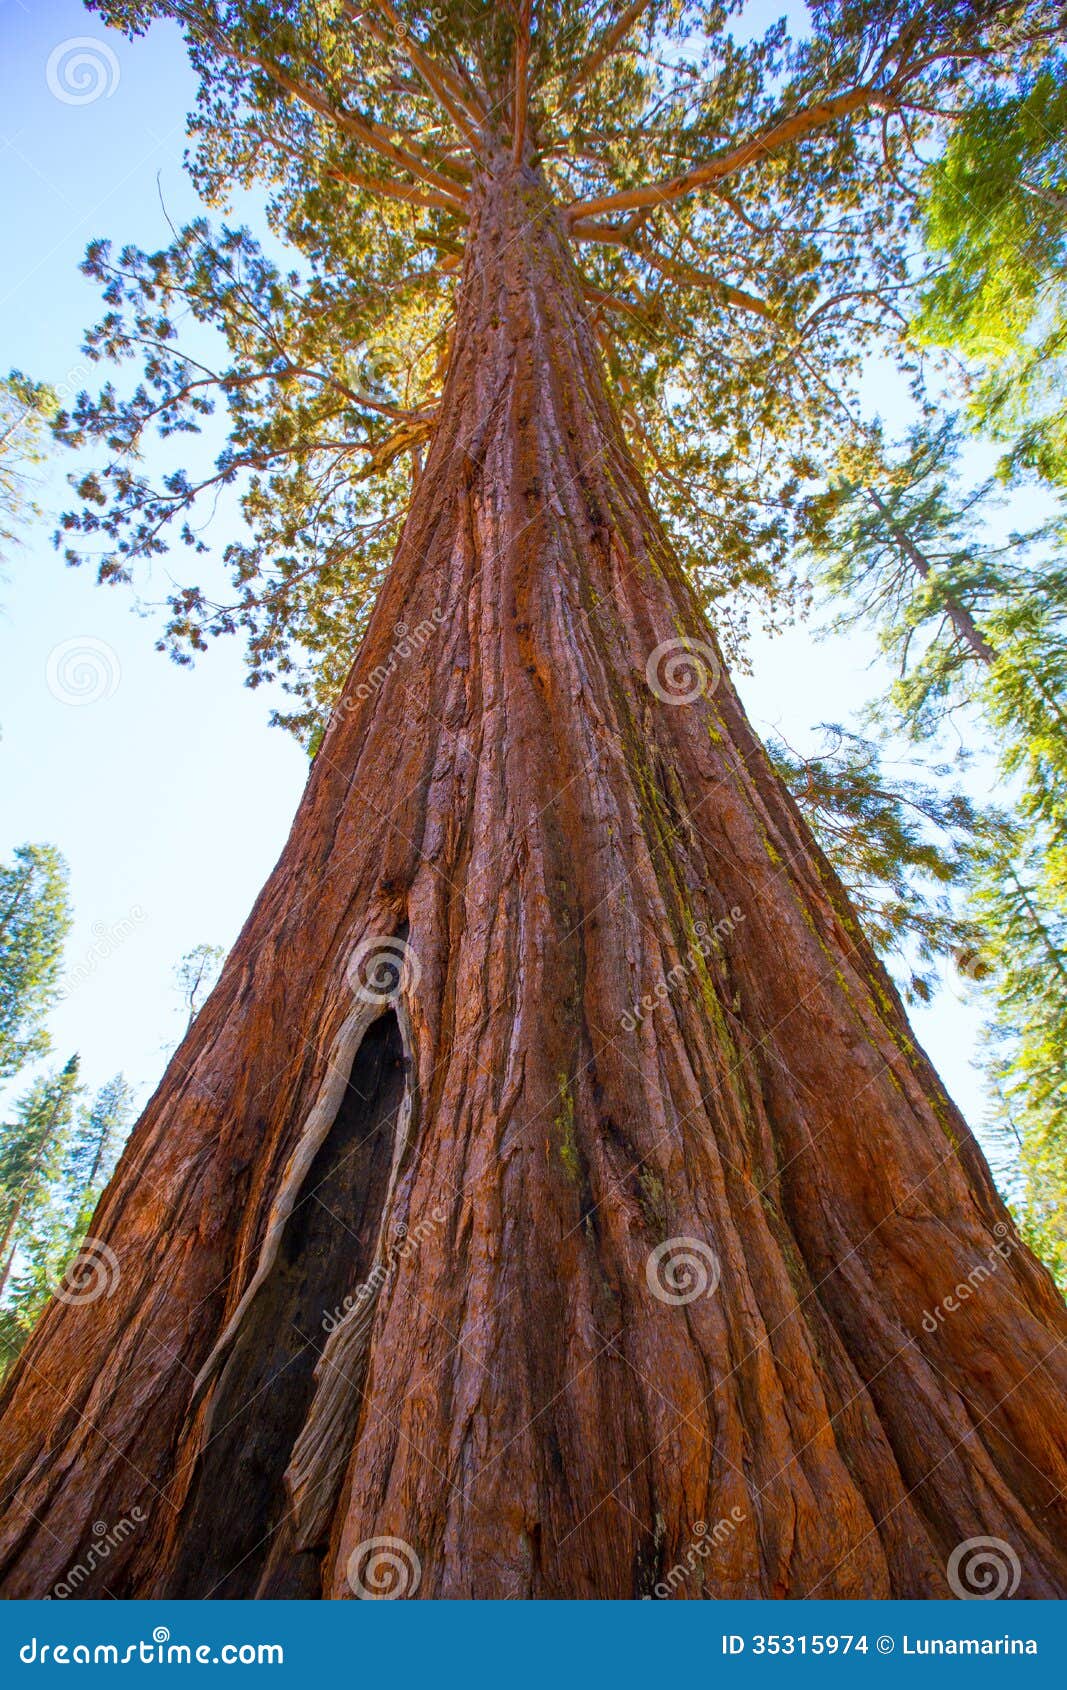 sequoias in mariposa grove at yosemite national park